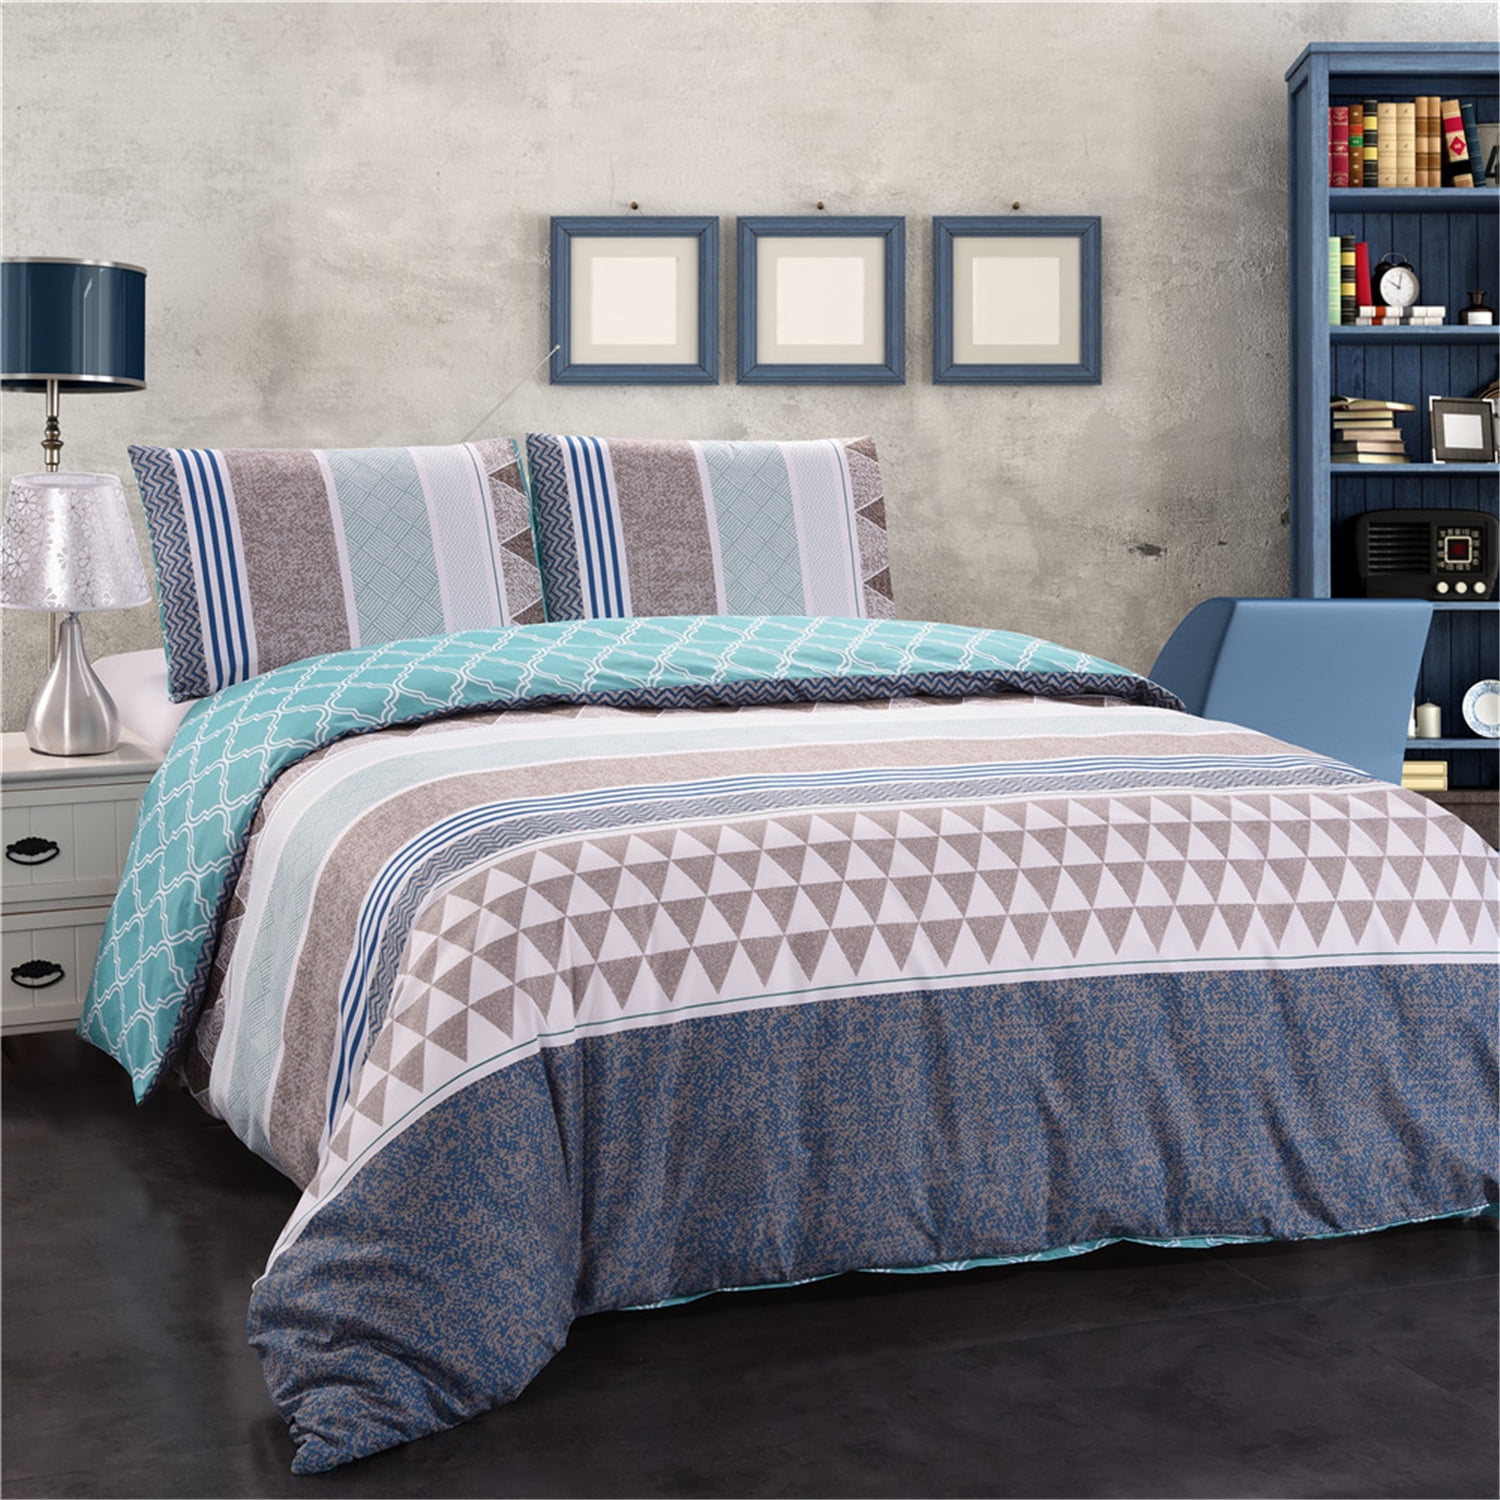 Details about   Blue Egyptian Cotton Bedding Set Queen King Bed Set Duvet Cover Bed Sheet Set 